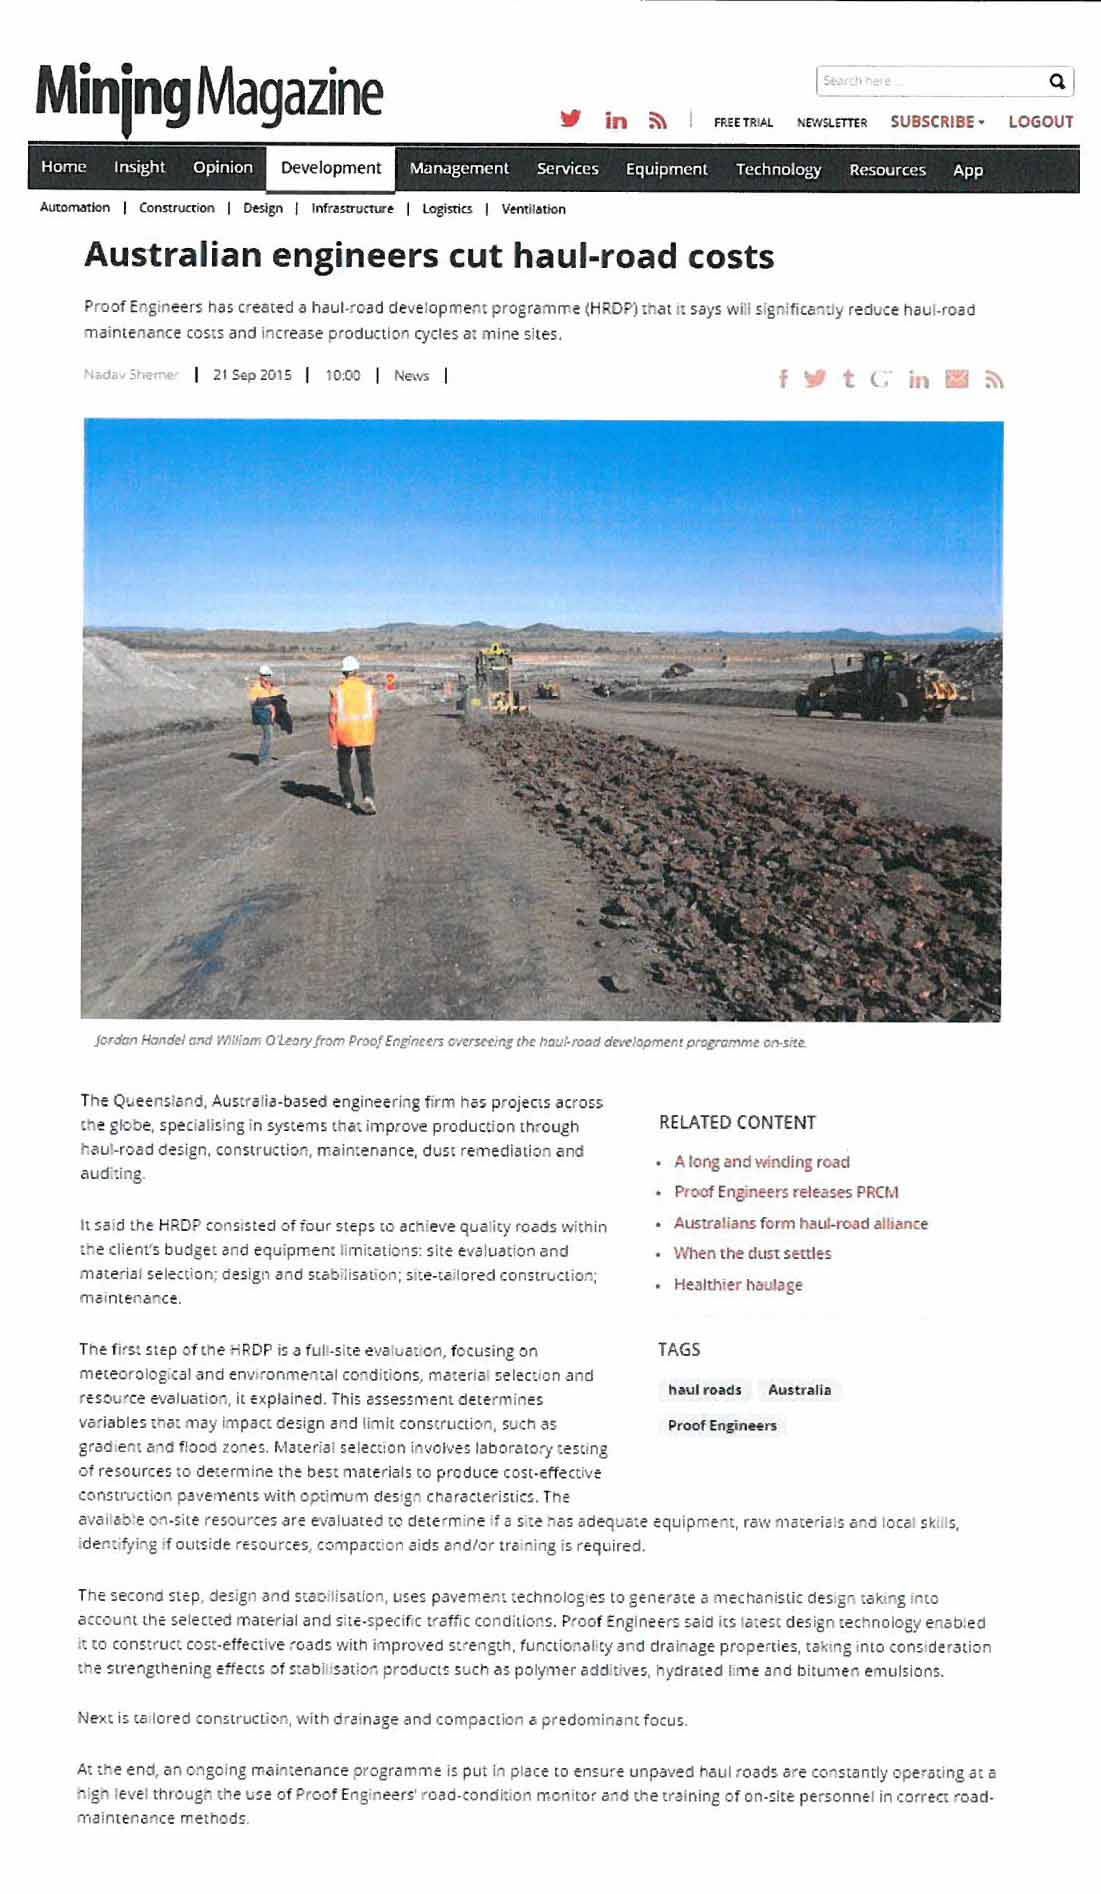 Australian Engineers Cut Haul-Road Costs